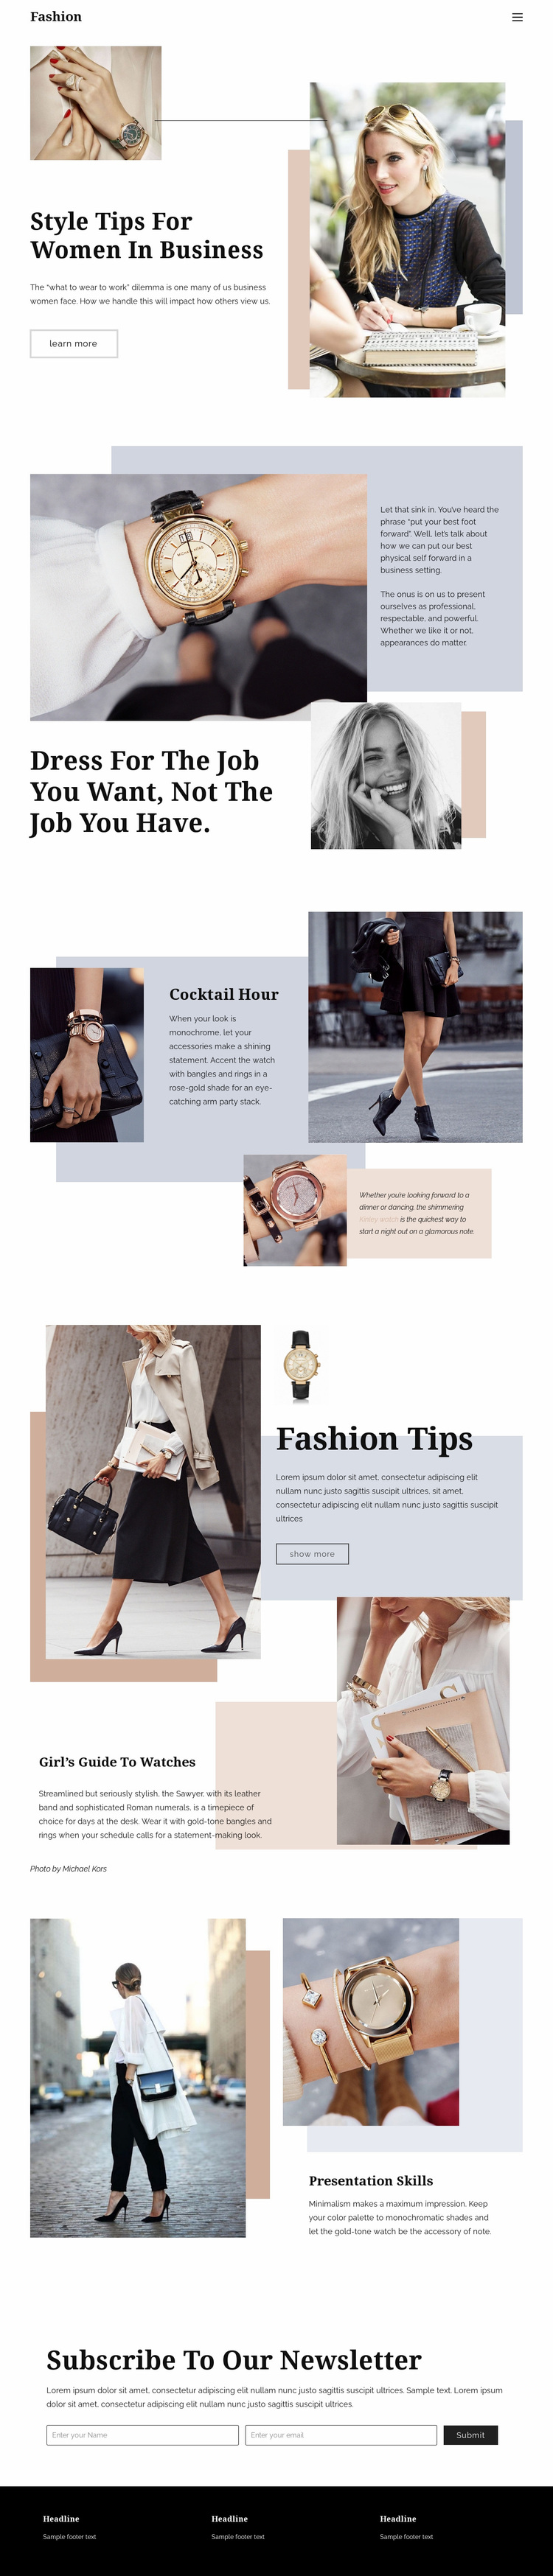 Fashion tips Website Design